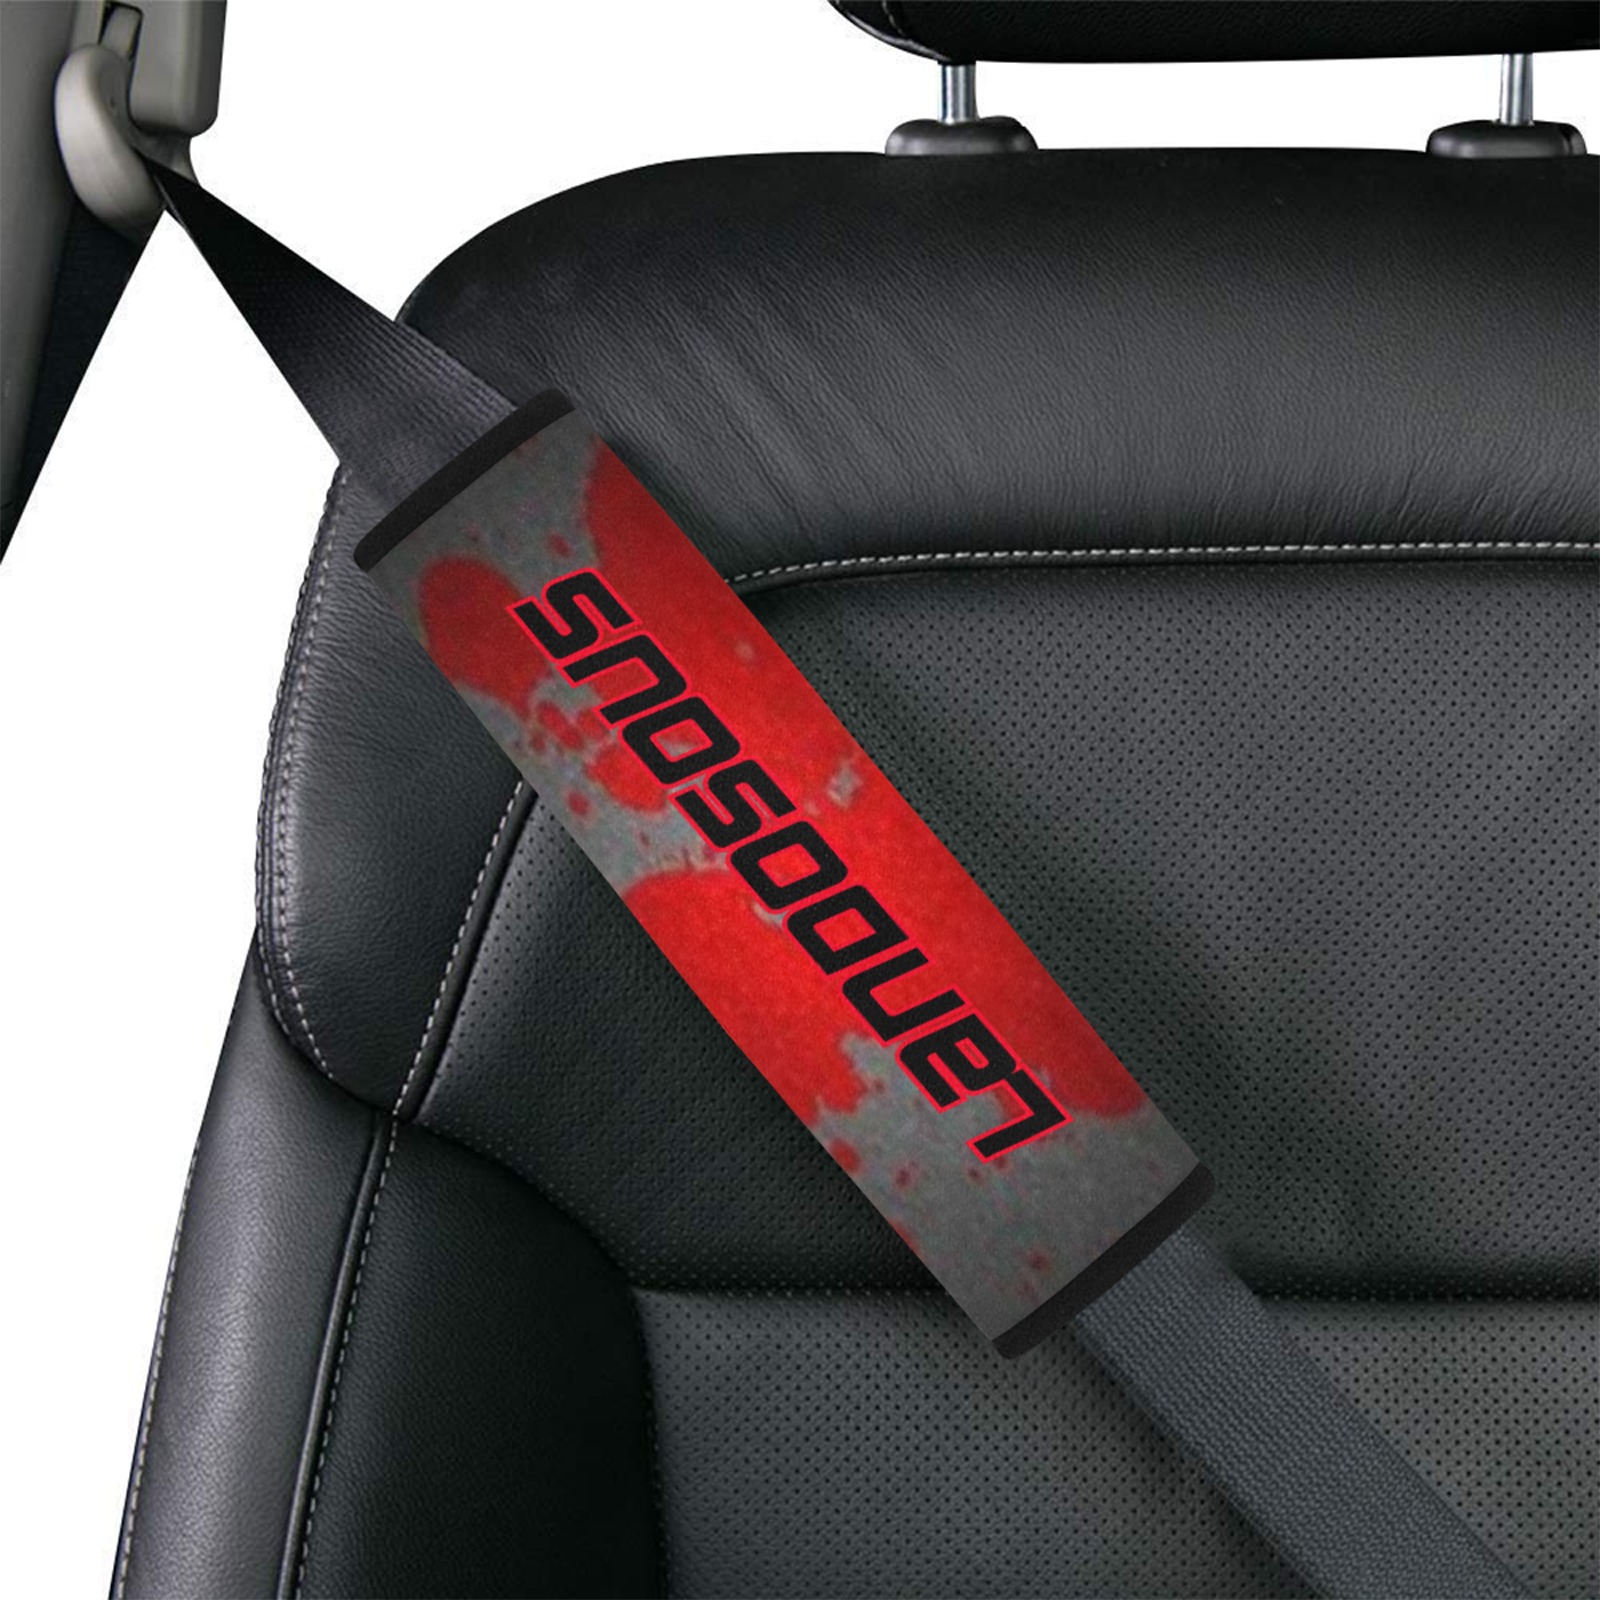 Landosous World Black/Gray/Red Car Seat Belt Cover 7''x10''